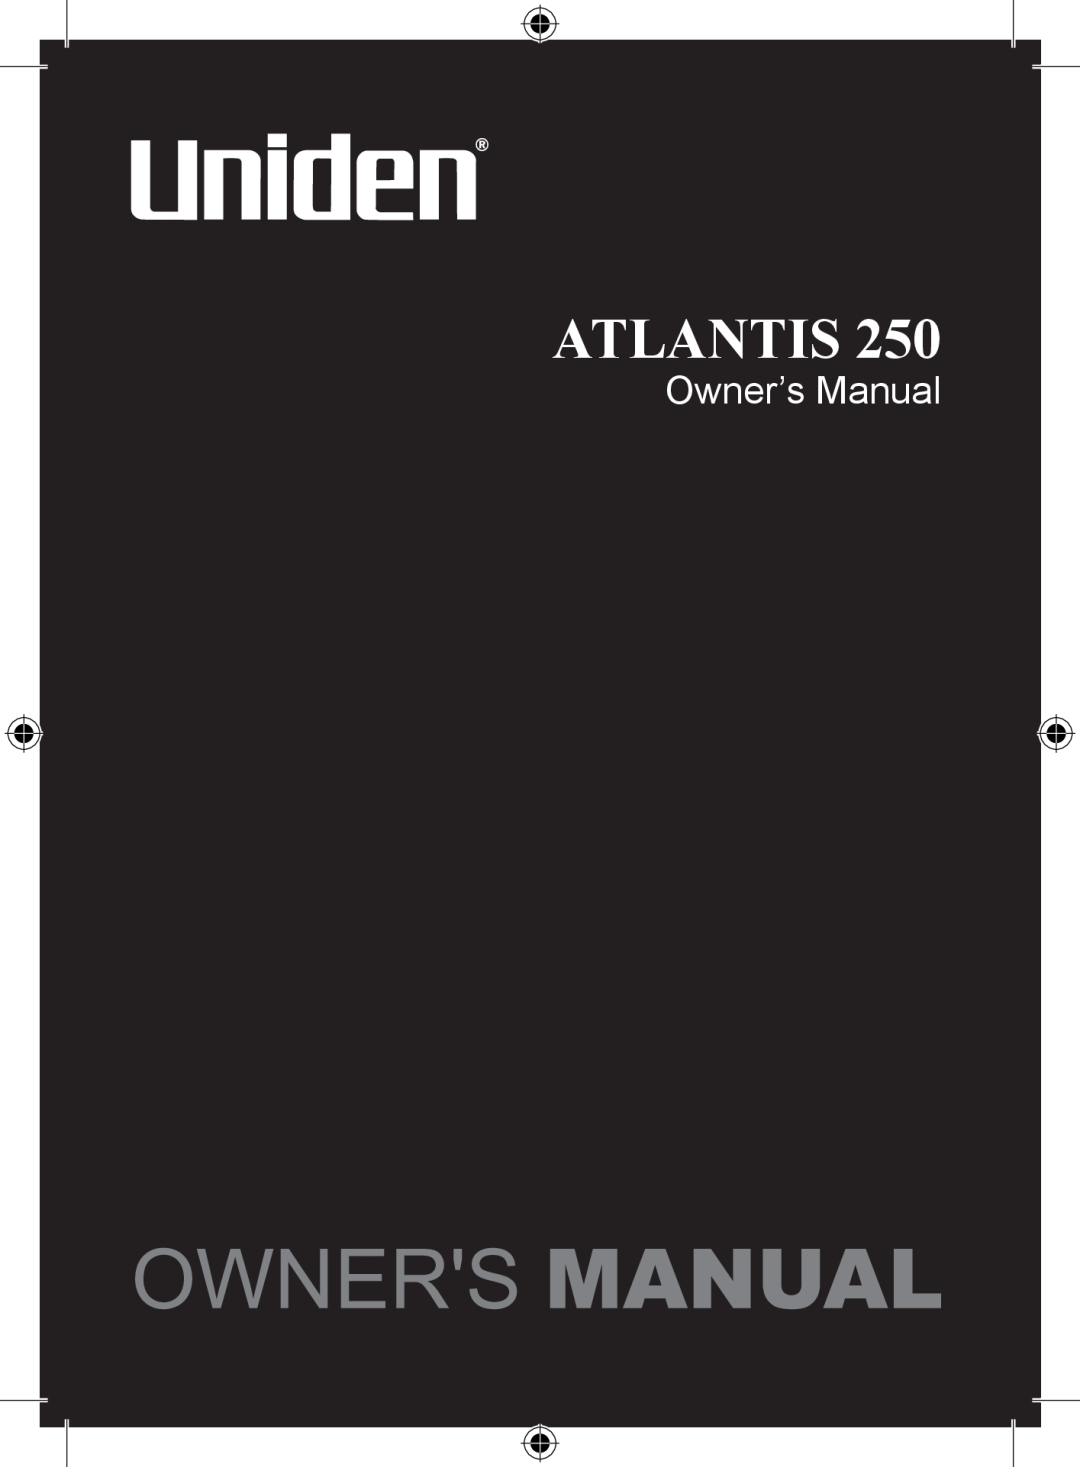 Uniden 250 manual 